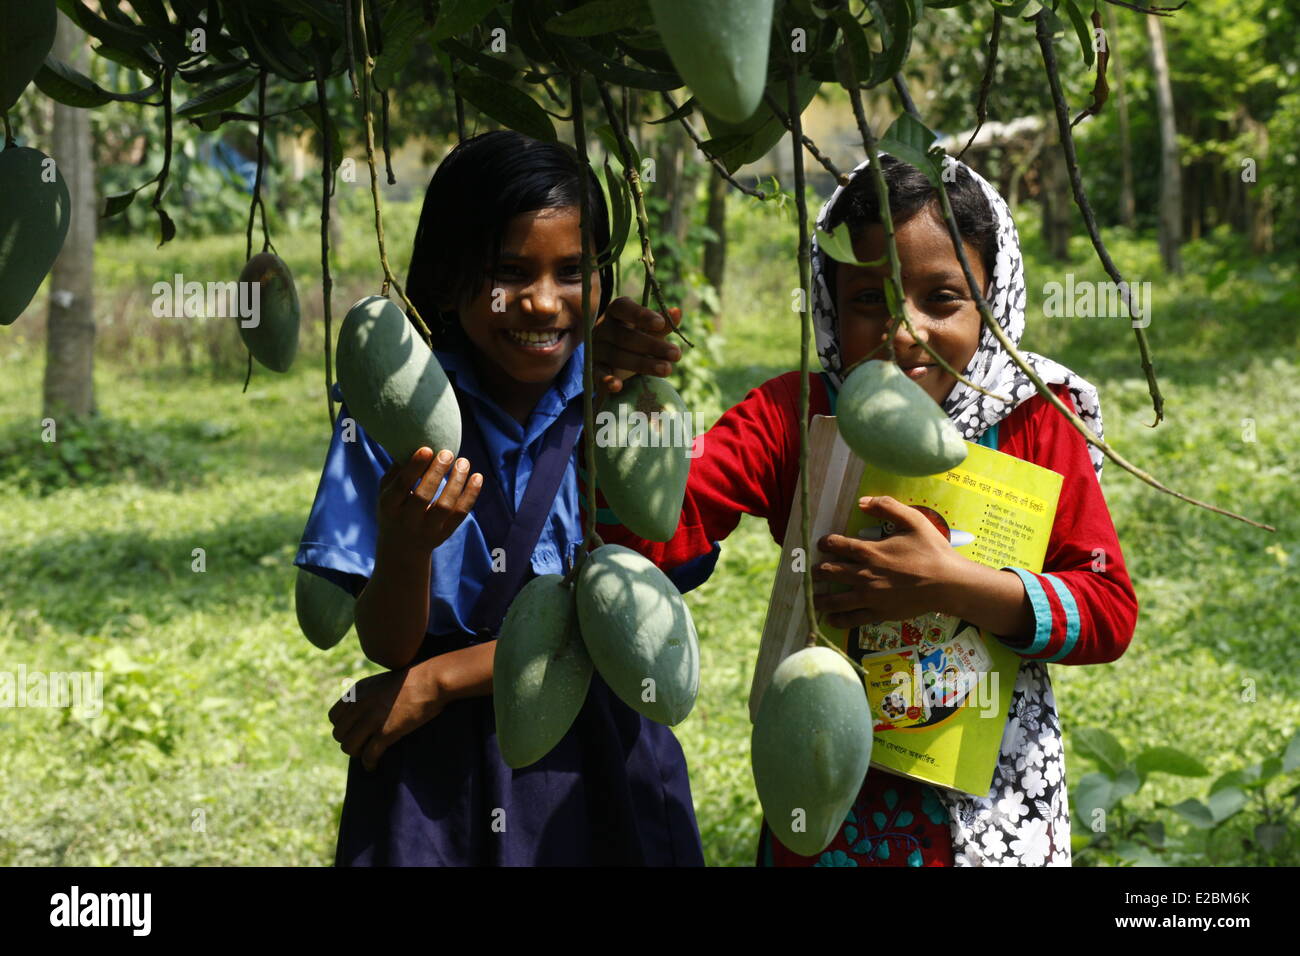 Chapainawabganj, Bangladesh, 17th June, 2014. Chapainawabganj, Bangladesh, 17th June, 2014. School children coming back from school unsing path of mango garden in Bangladesh. Bangladesh generally produces about 800,000 metric tons of mangoes on 51,000 hectors of land. Chapainawabganj alone produces almost 200,000 tons of mangoes on 23,282 hectares of land. © zakir hossain chowdhury zakir/Alamy Live News Credit:  zakir hossain chowdhury zakir/Alamy Live News Stock Photo